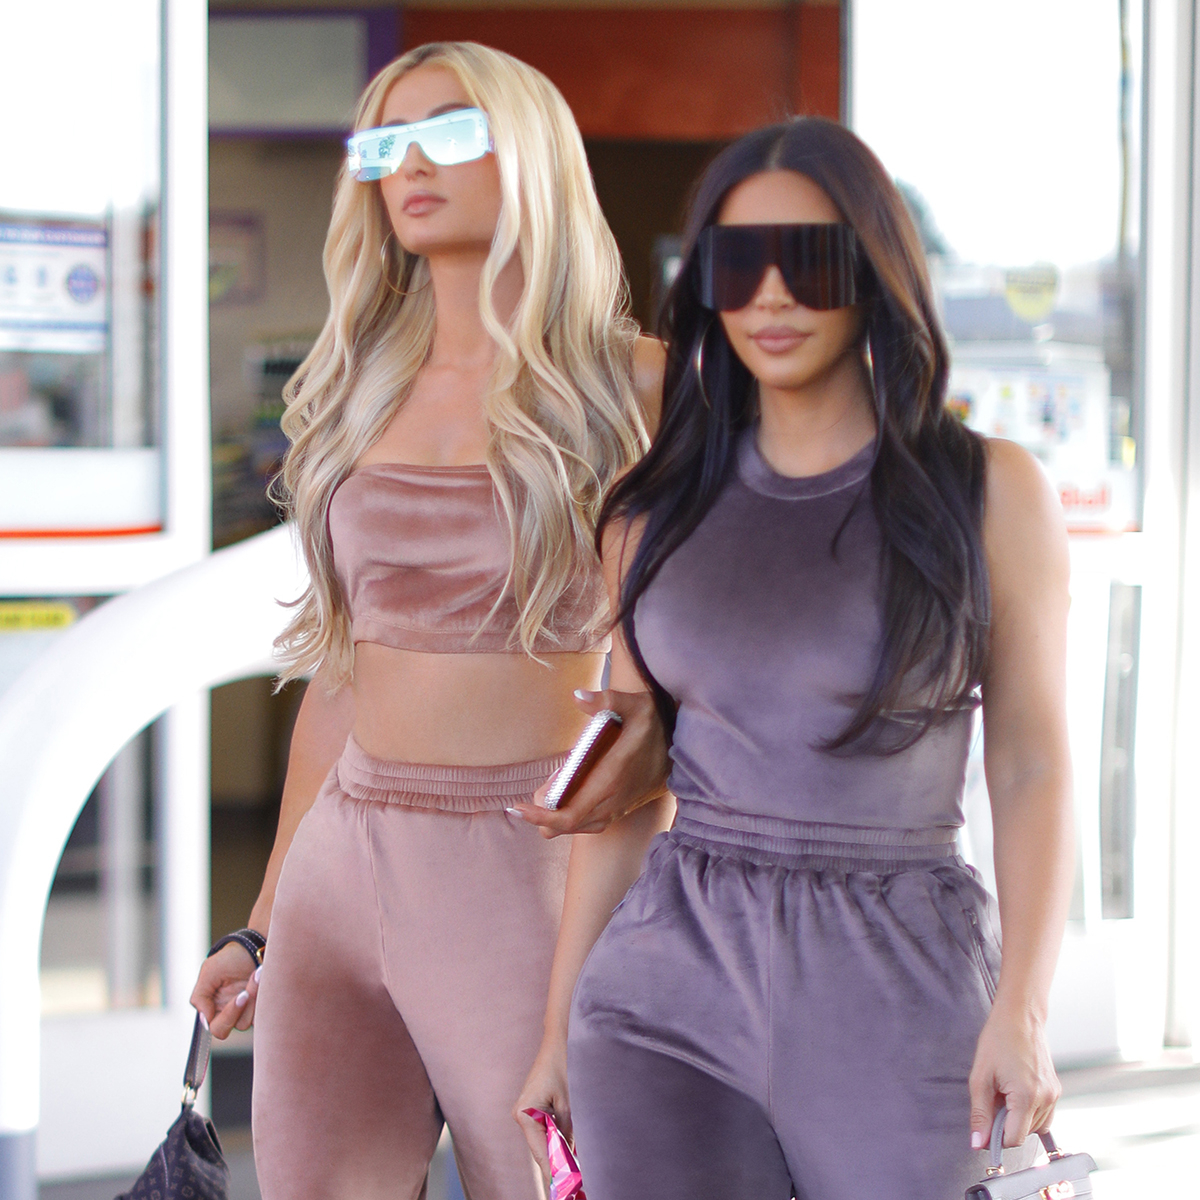 Kim Kardashian & Paris Hilton Early '00s Outfits That Defined The